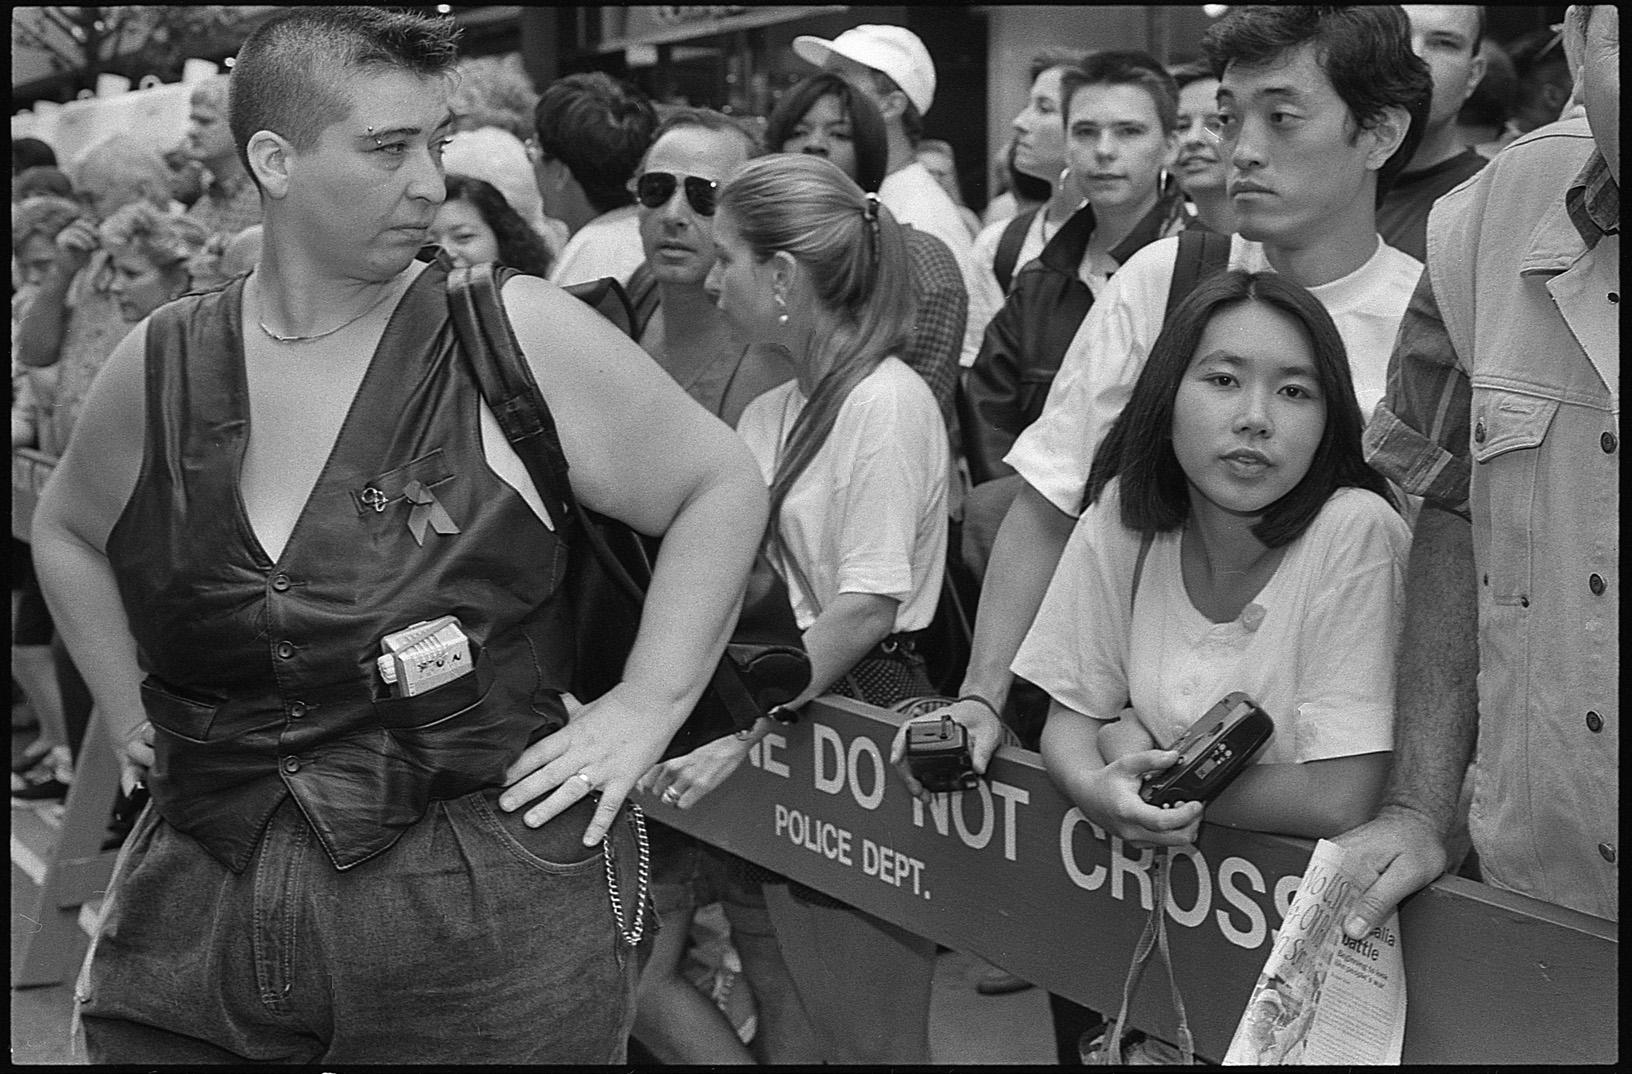 New York City Gay Pride Parade, June 27, 1993